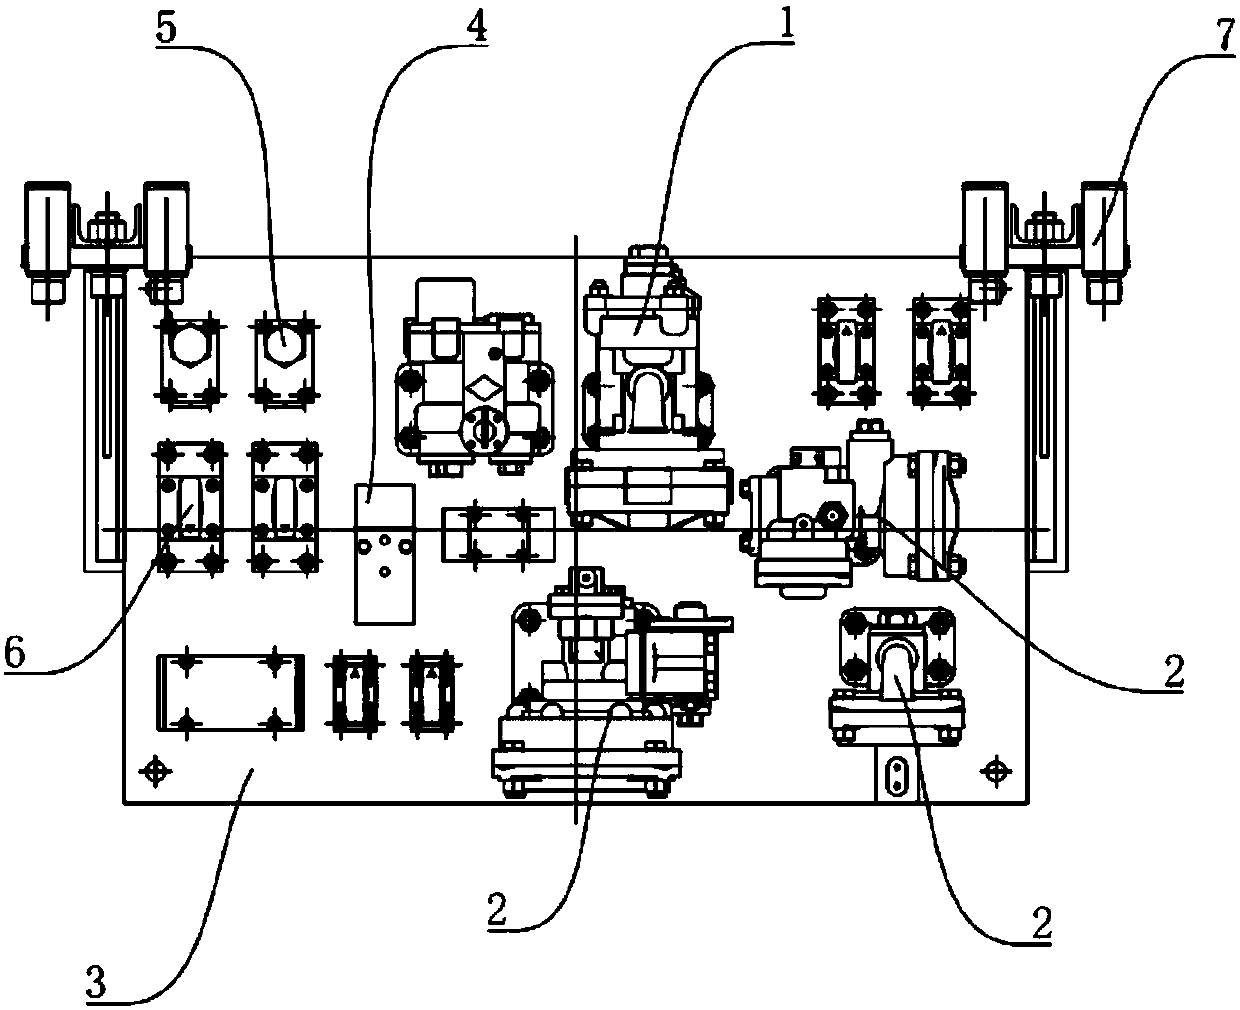 Brake system valve integrated device